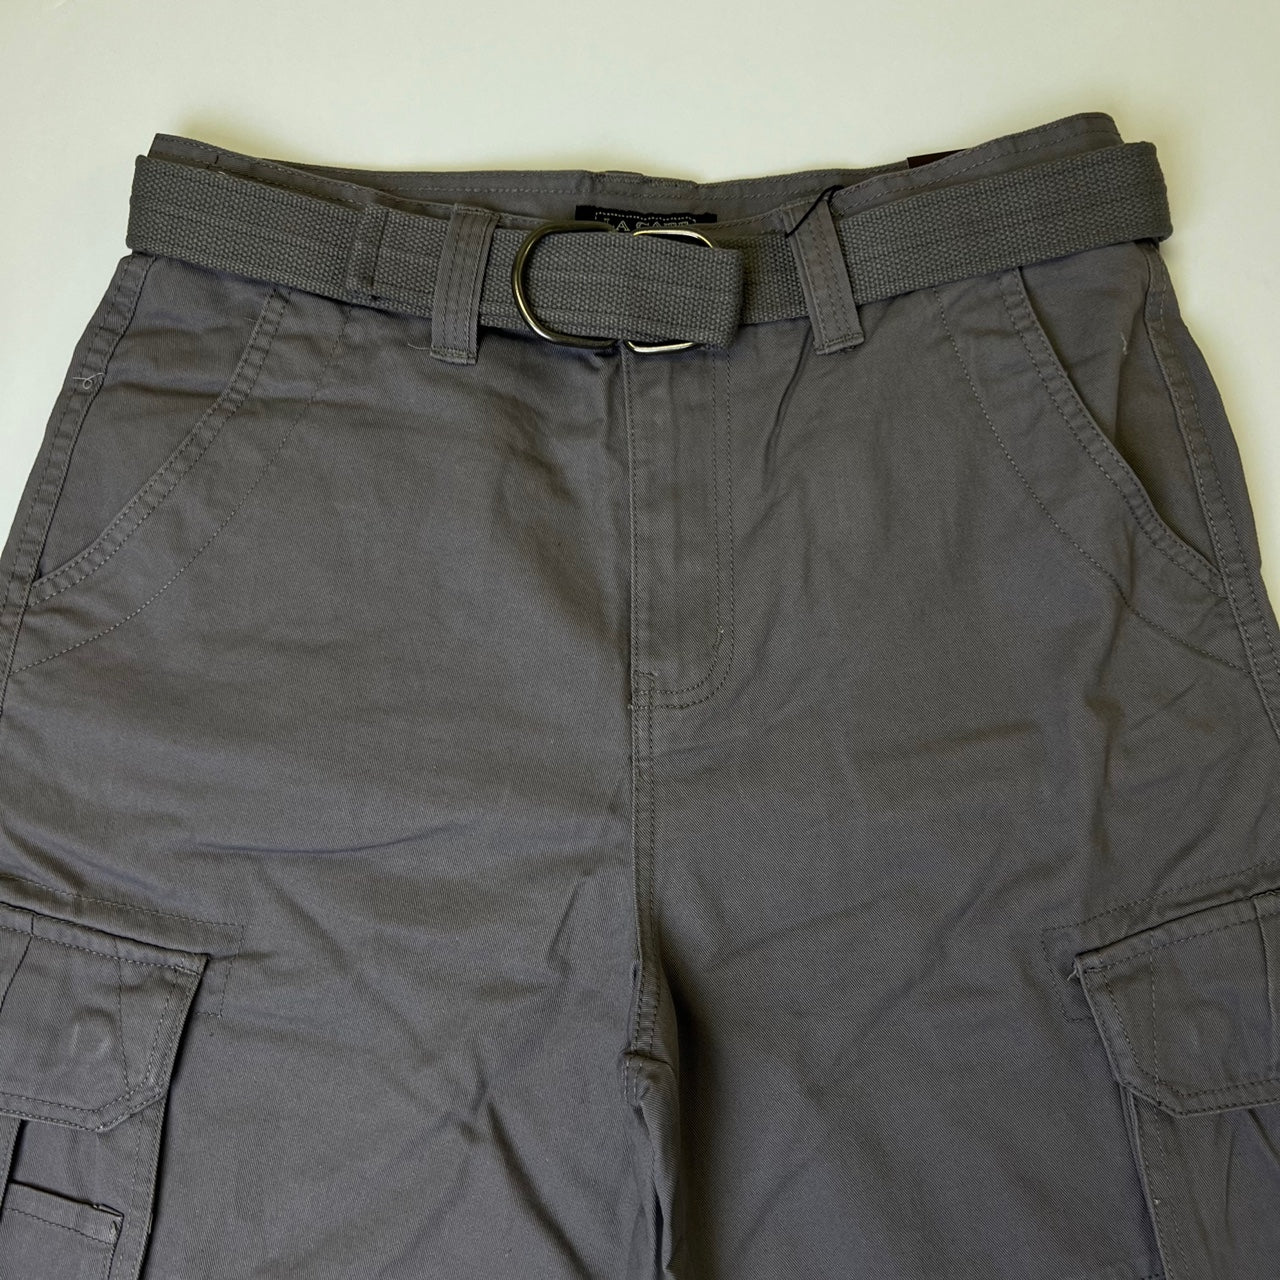 Grey Military Cargo Shorts with Pockets